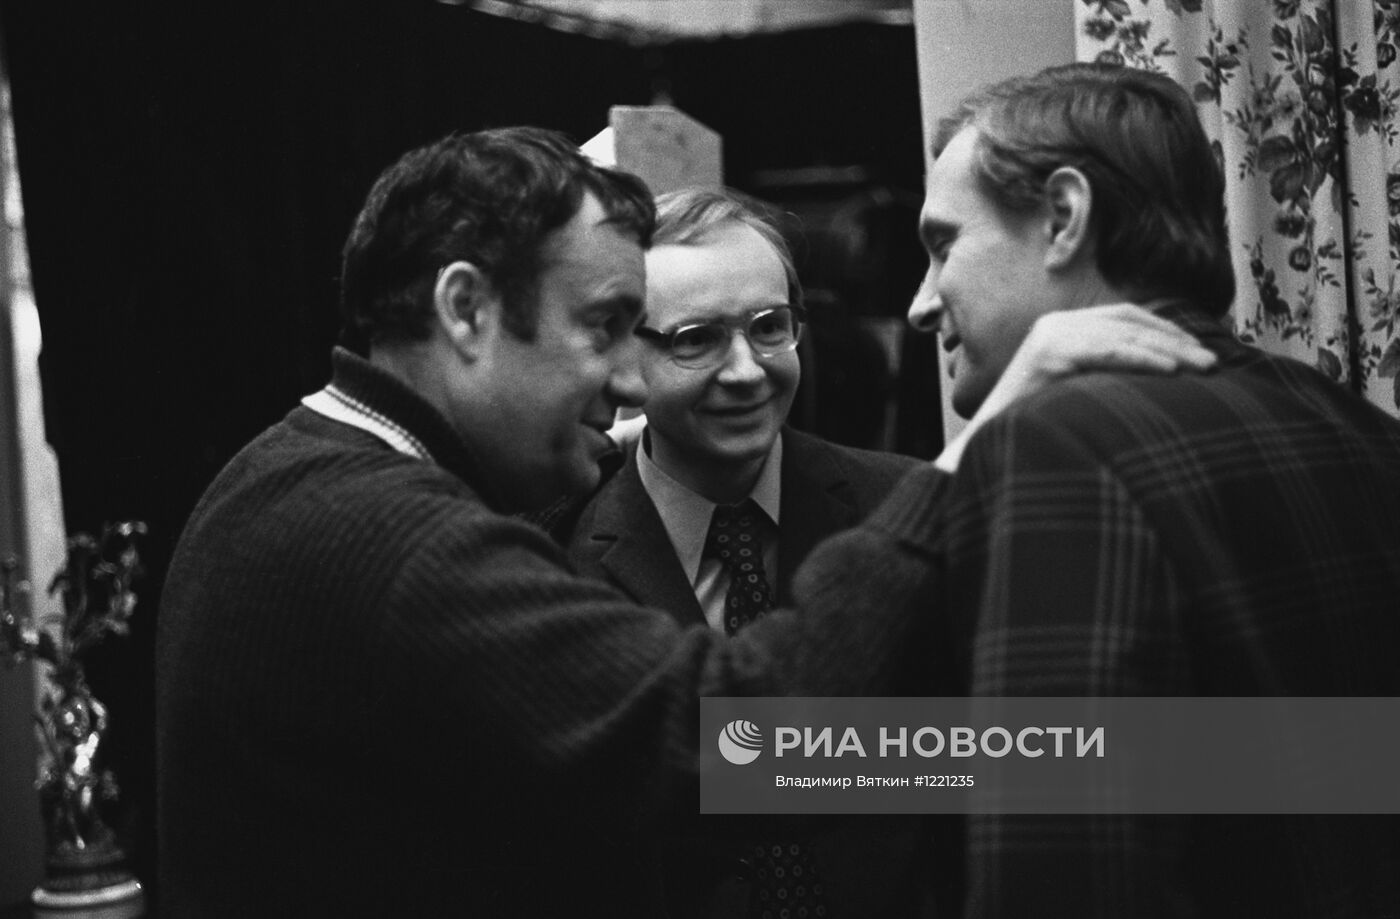 Эльдар Рязанов, Андрей Мягков, Олег Басилашвили